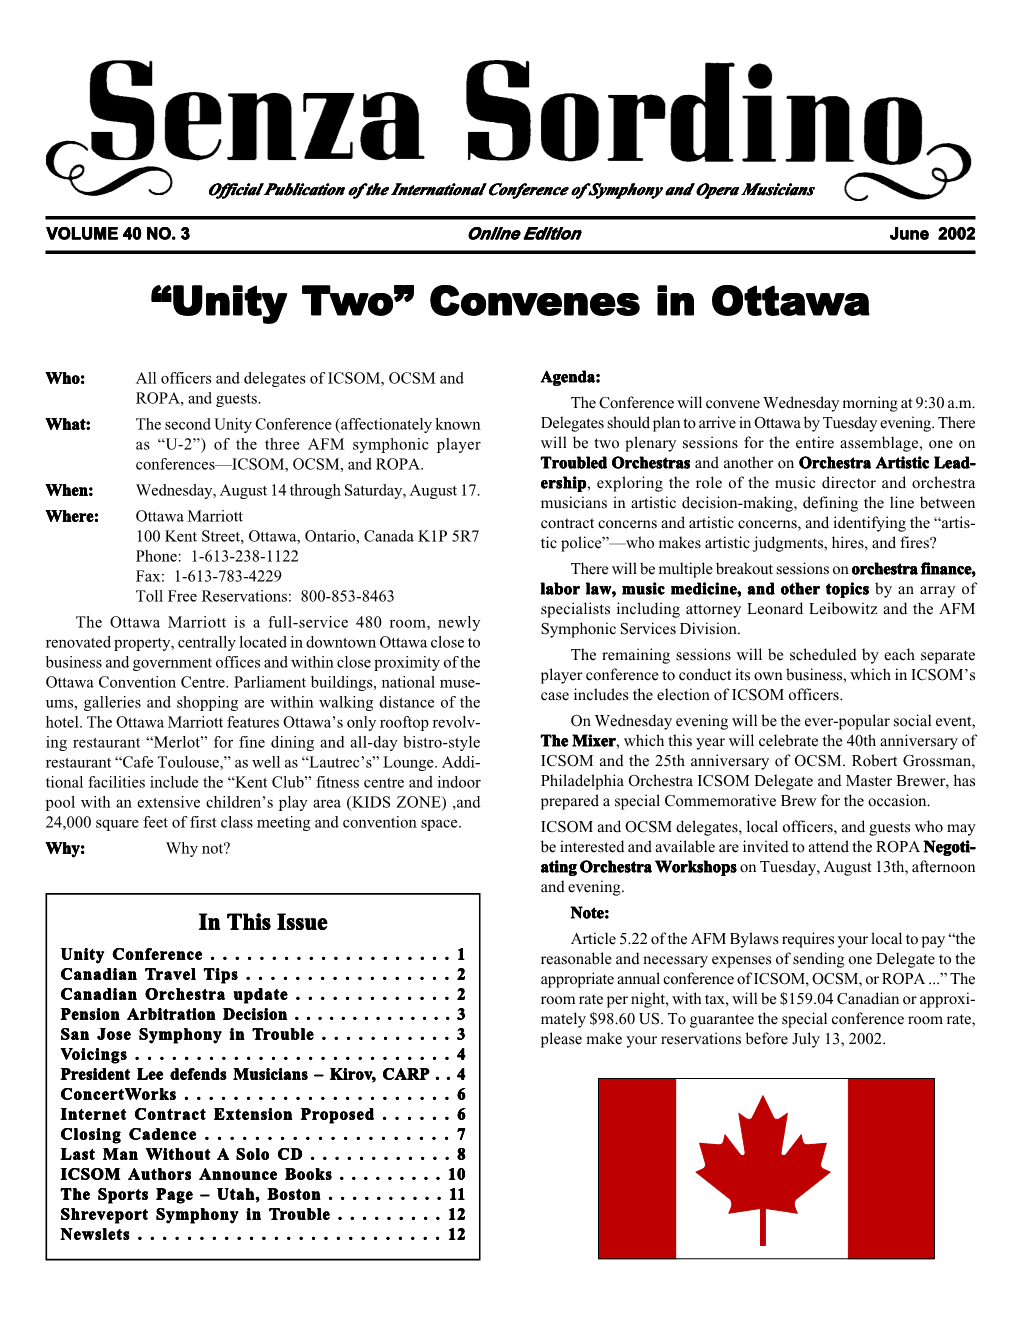 Unity Two” Convenes in Ottawa